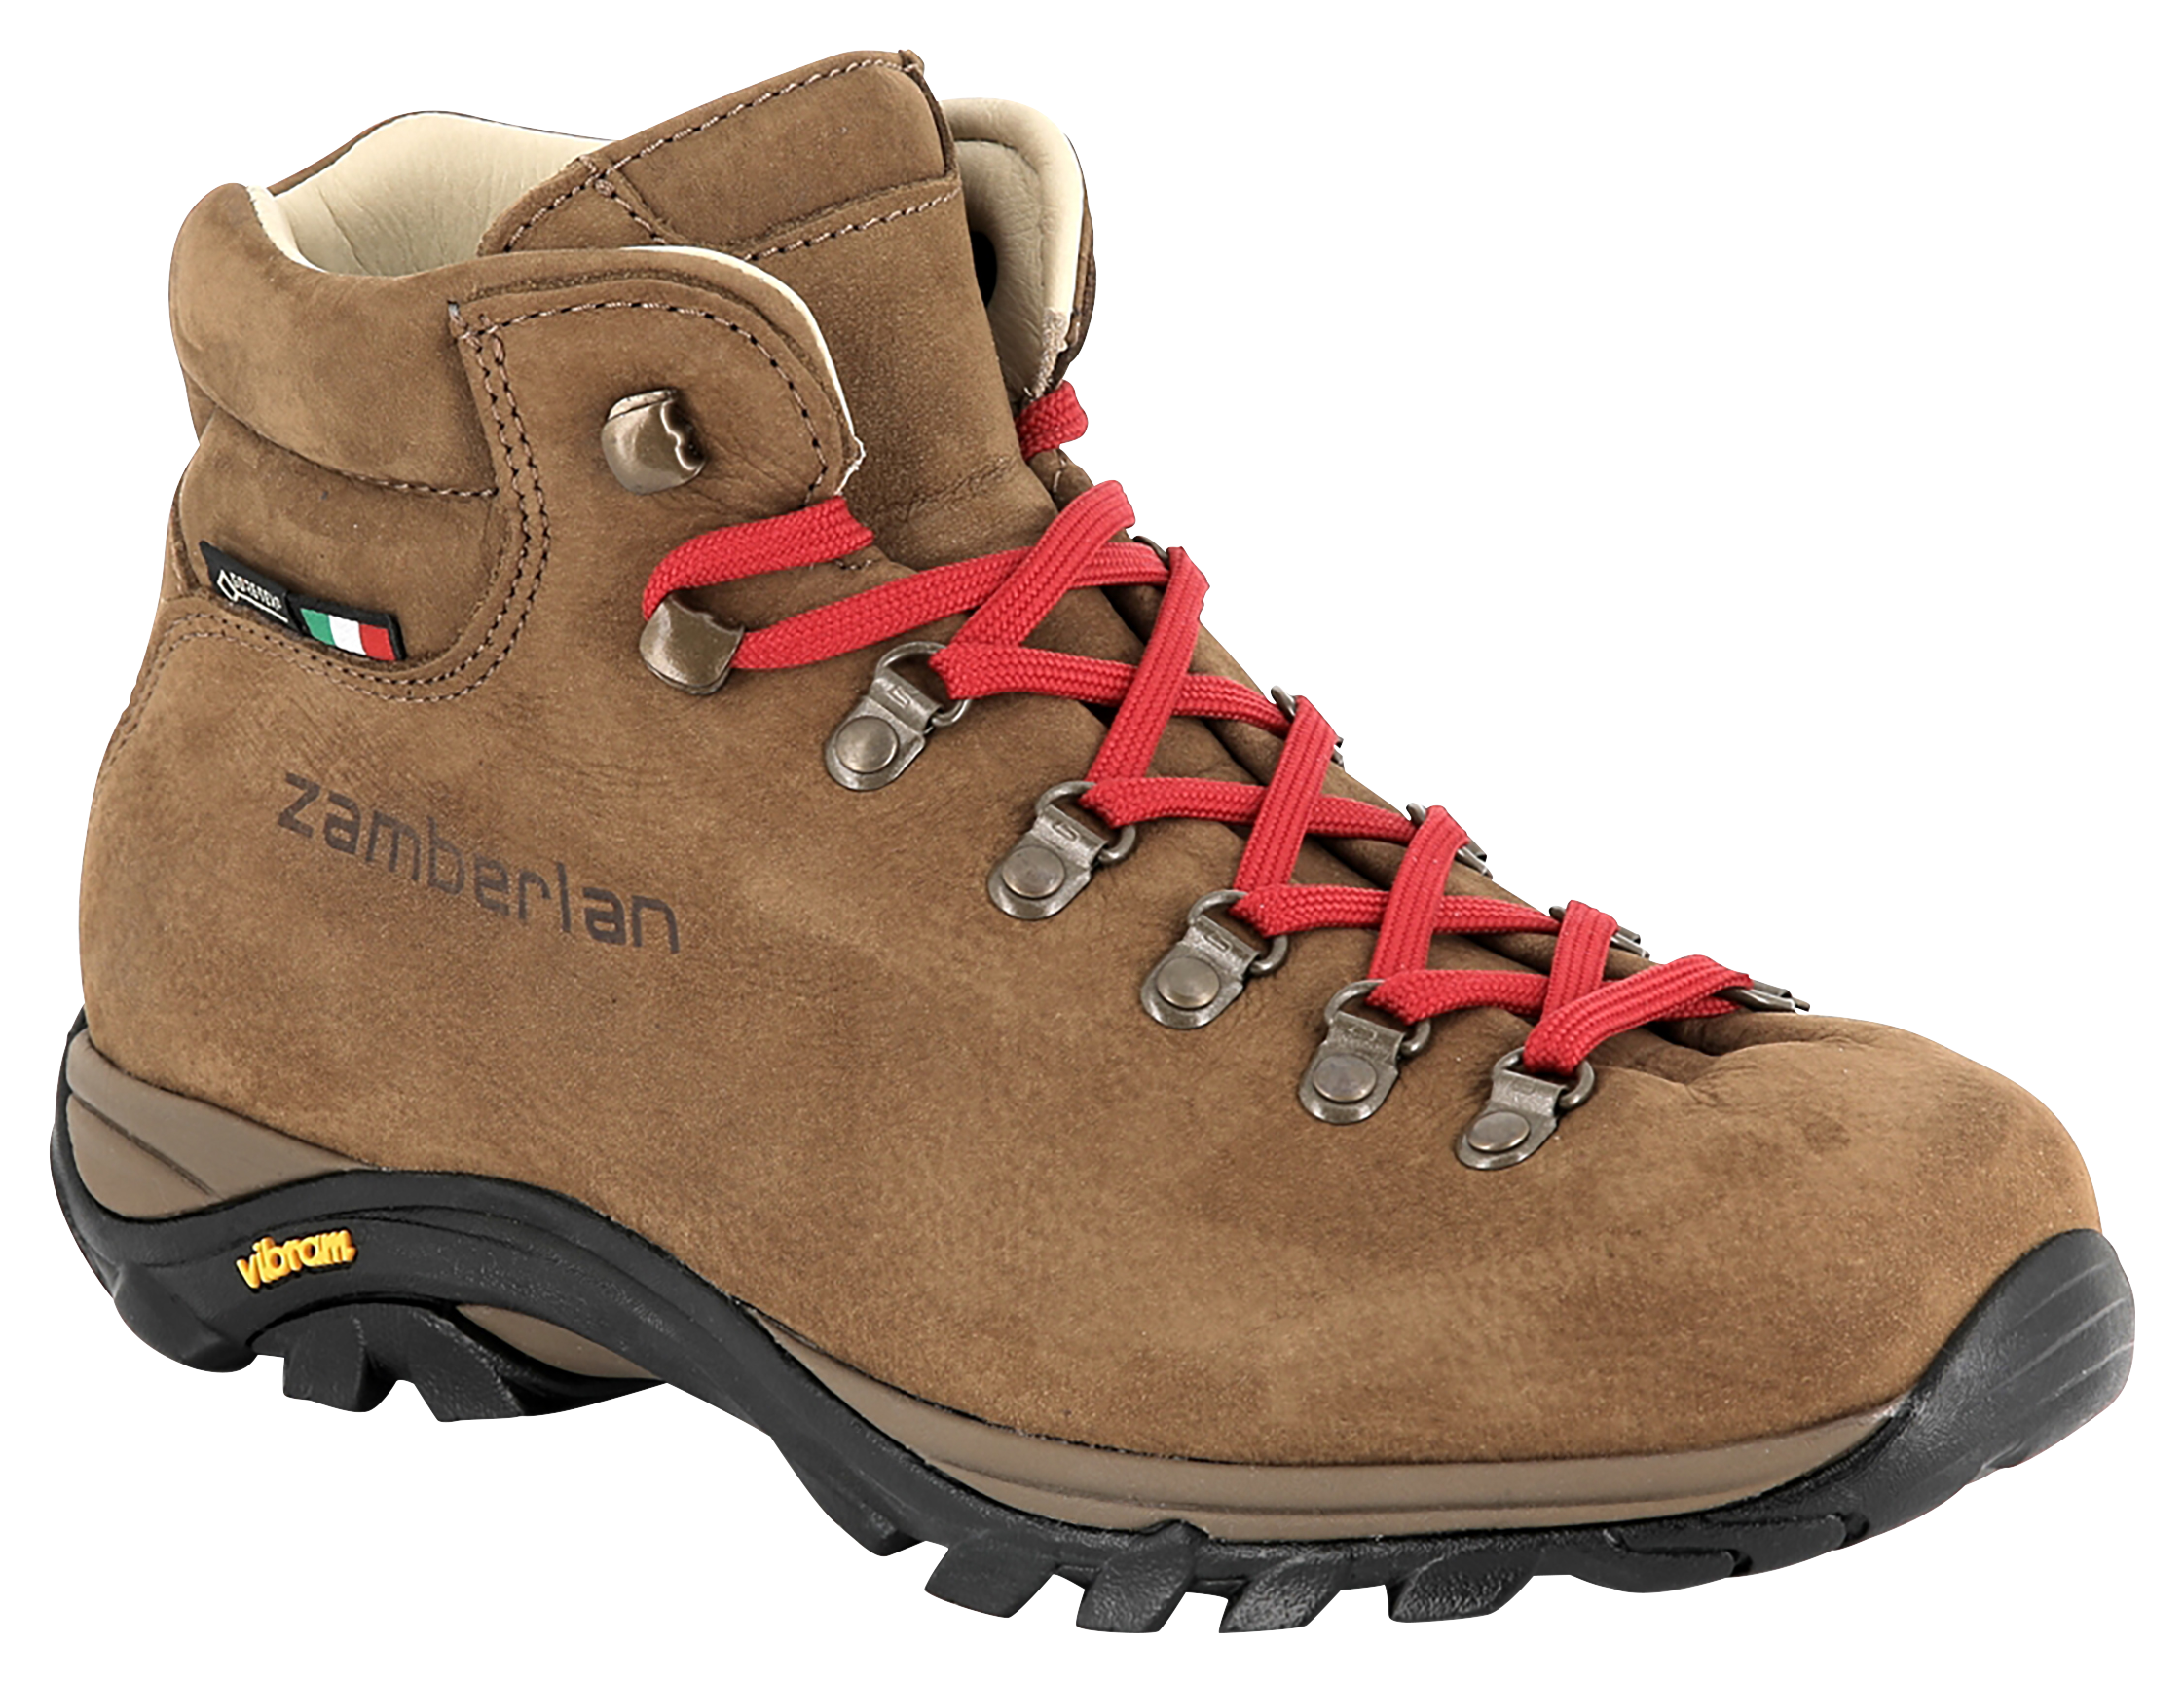 Zamberlan 320 Trail Lite EVO GTX Waterproof Hiking Boots for Ladies - Brown -  9M